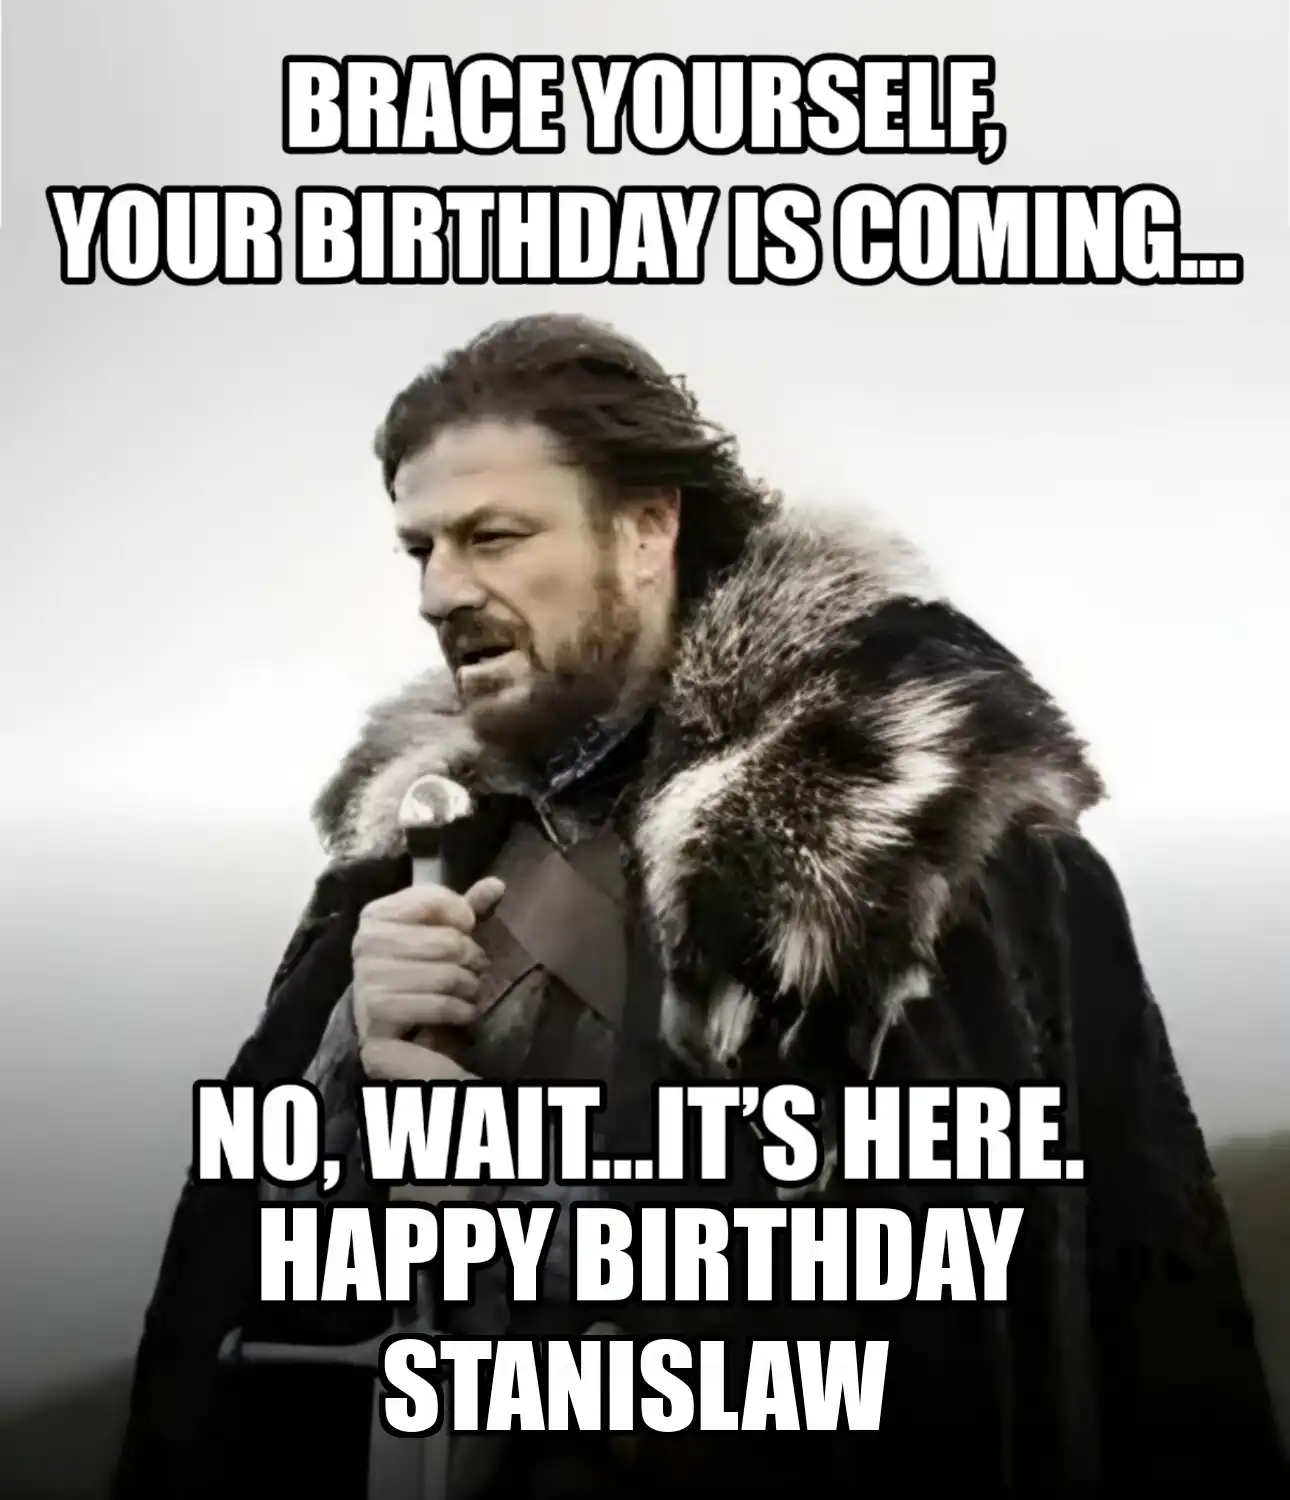 Happy Birthday Stanislaw Brace Yourself Your Birthday Is Coming Meme